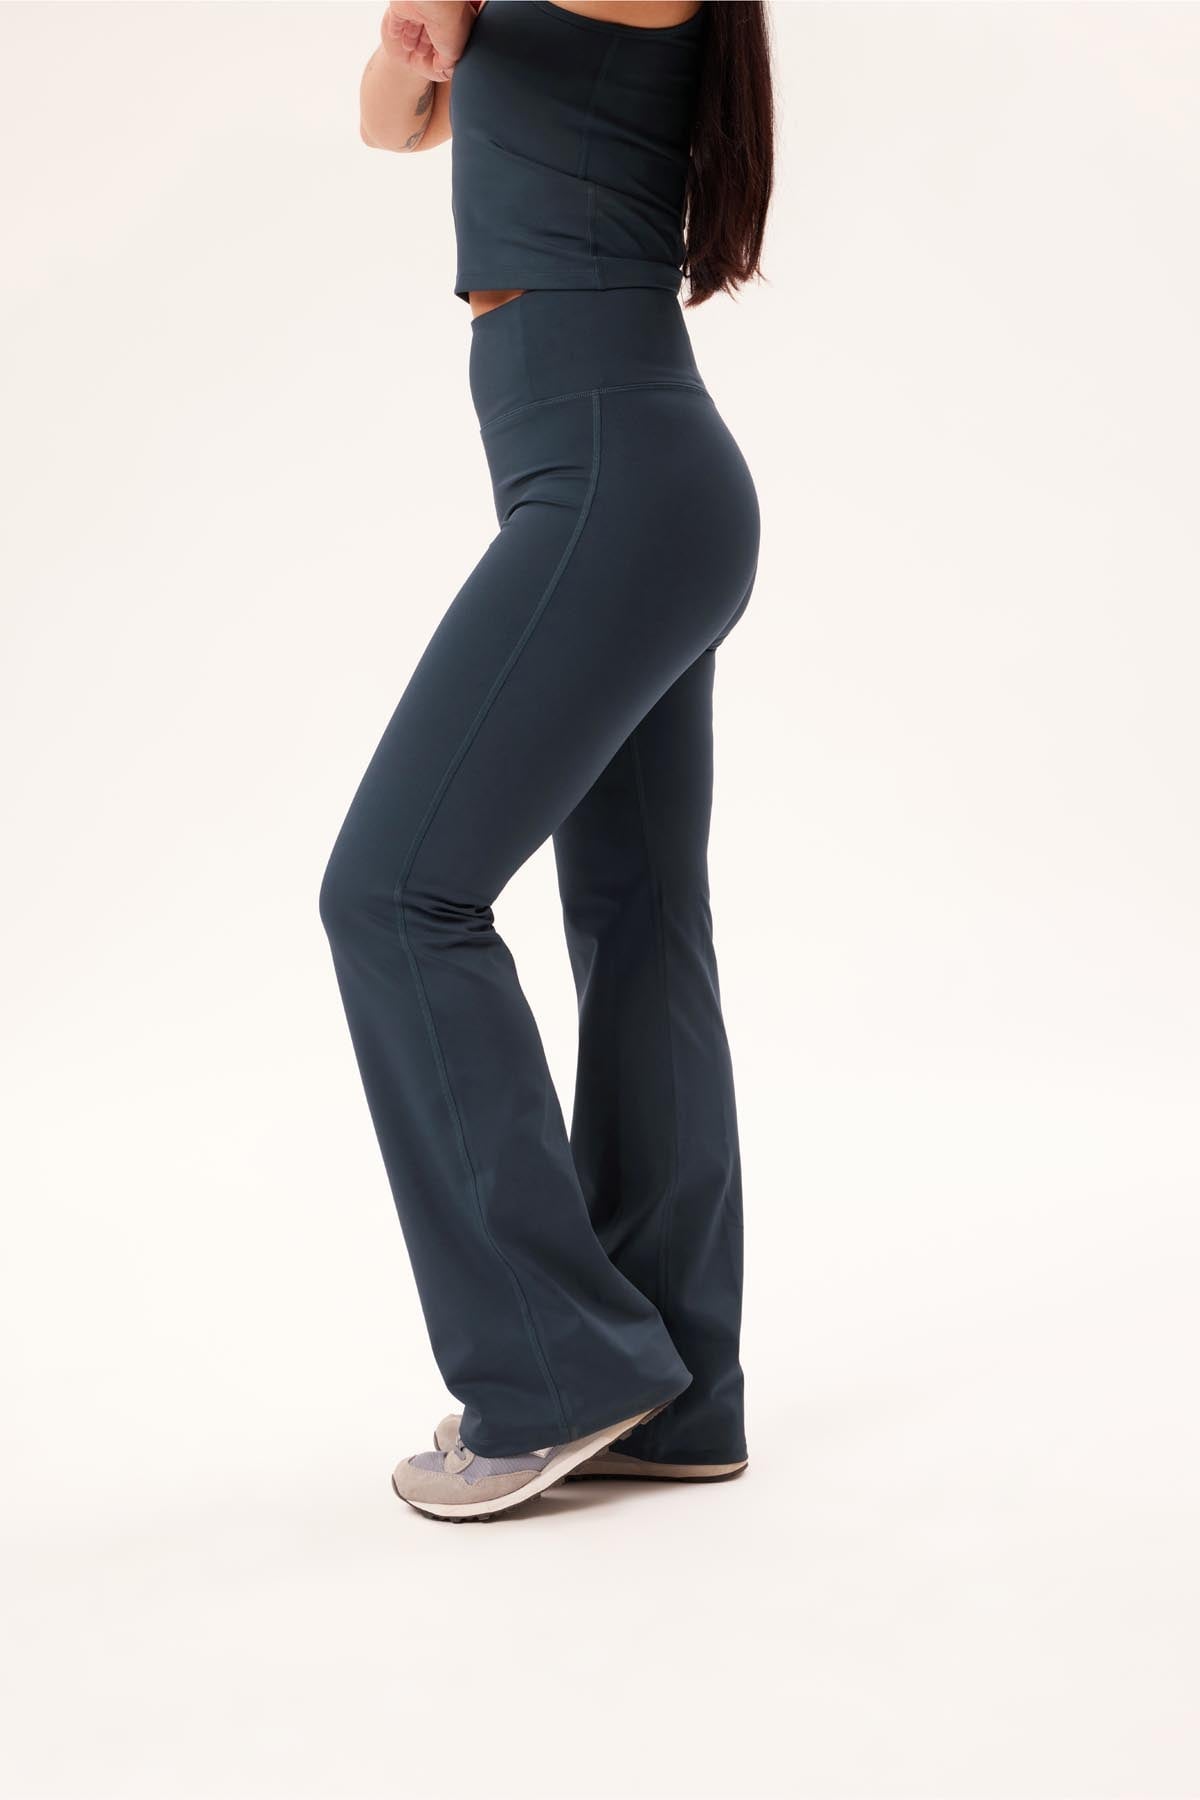 Affordable lululemon groove flare pants For Sale, Activewear